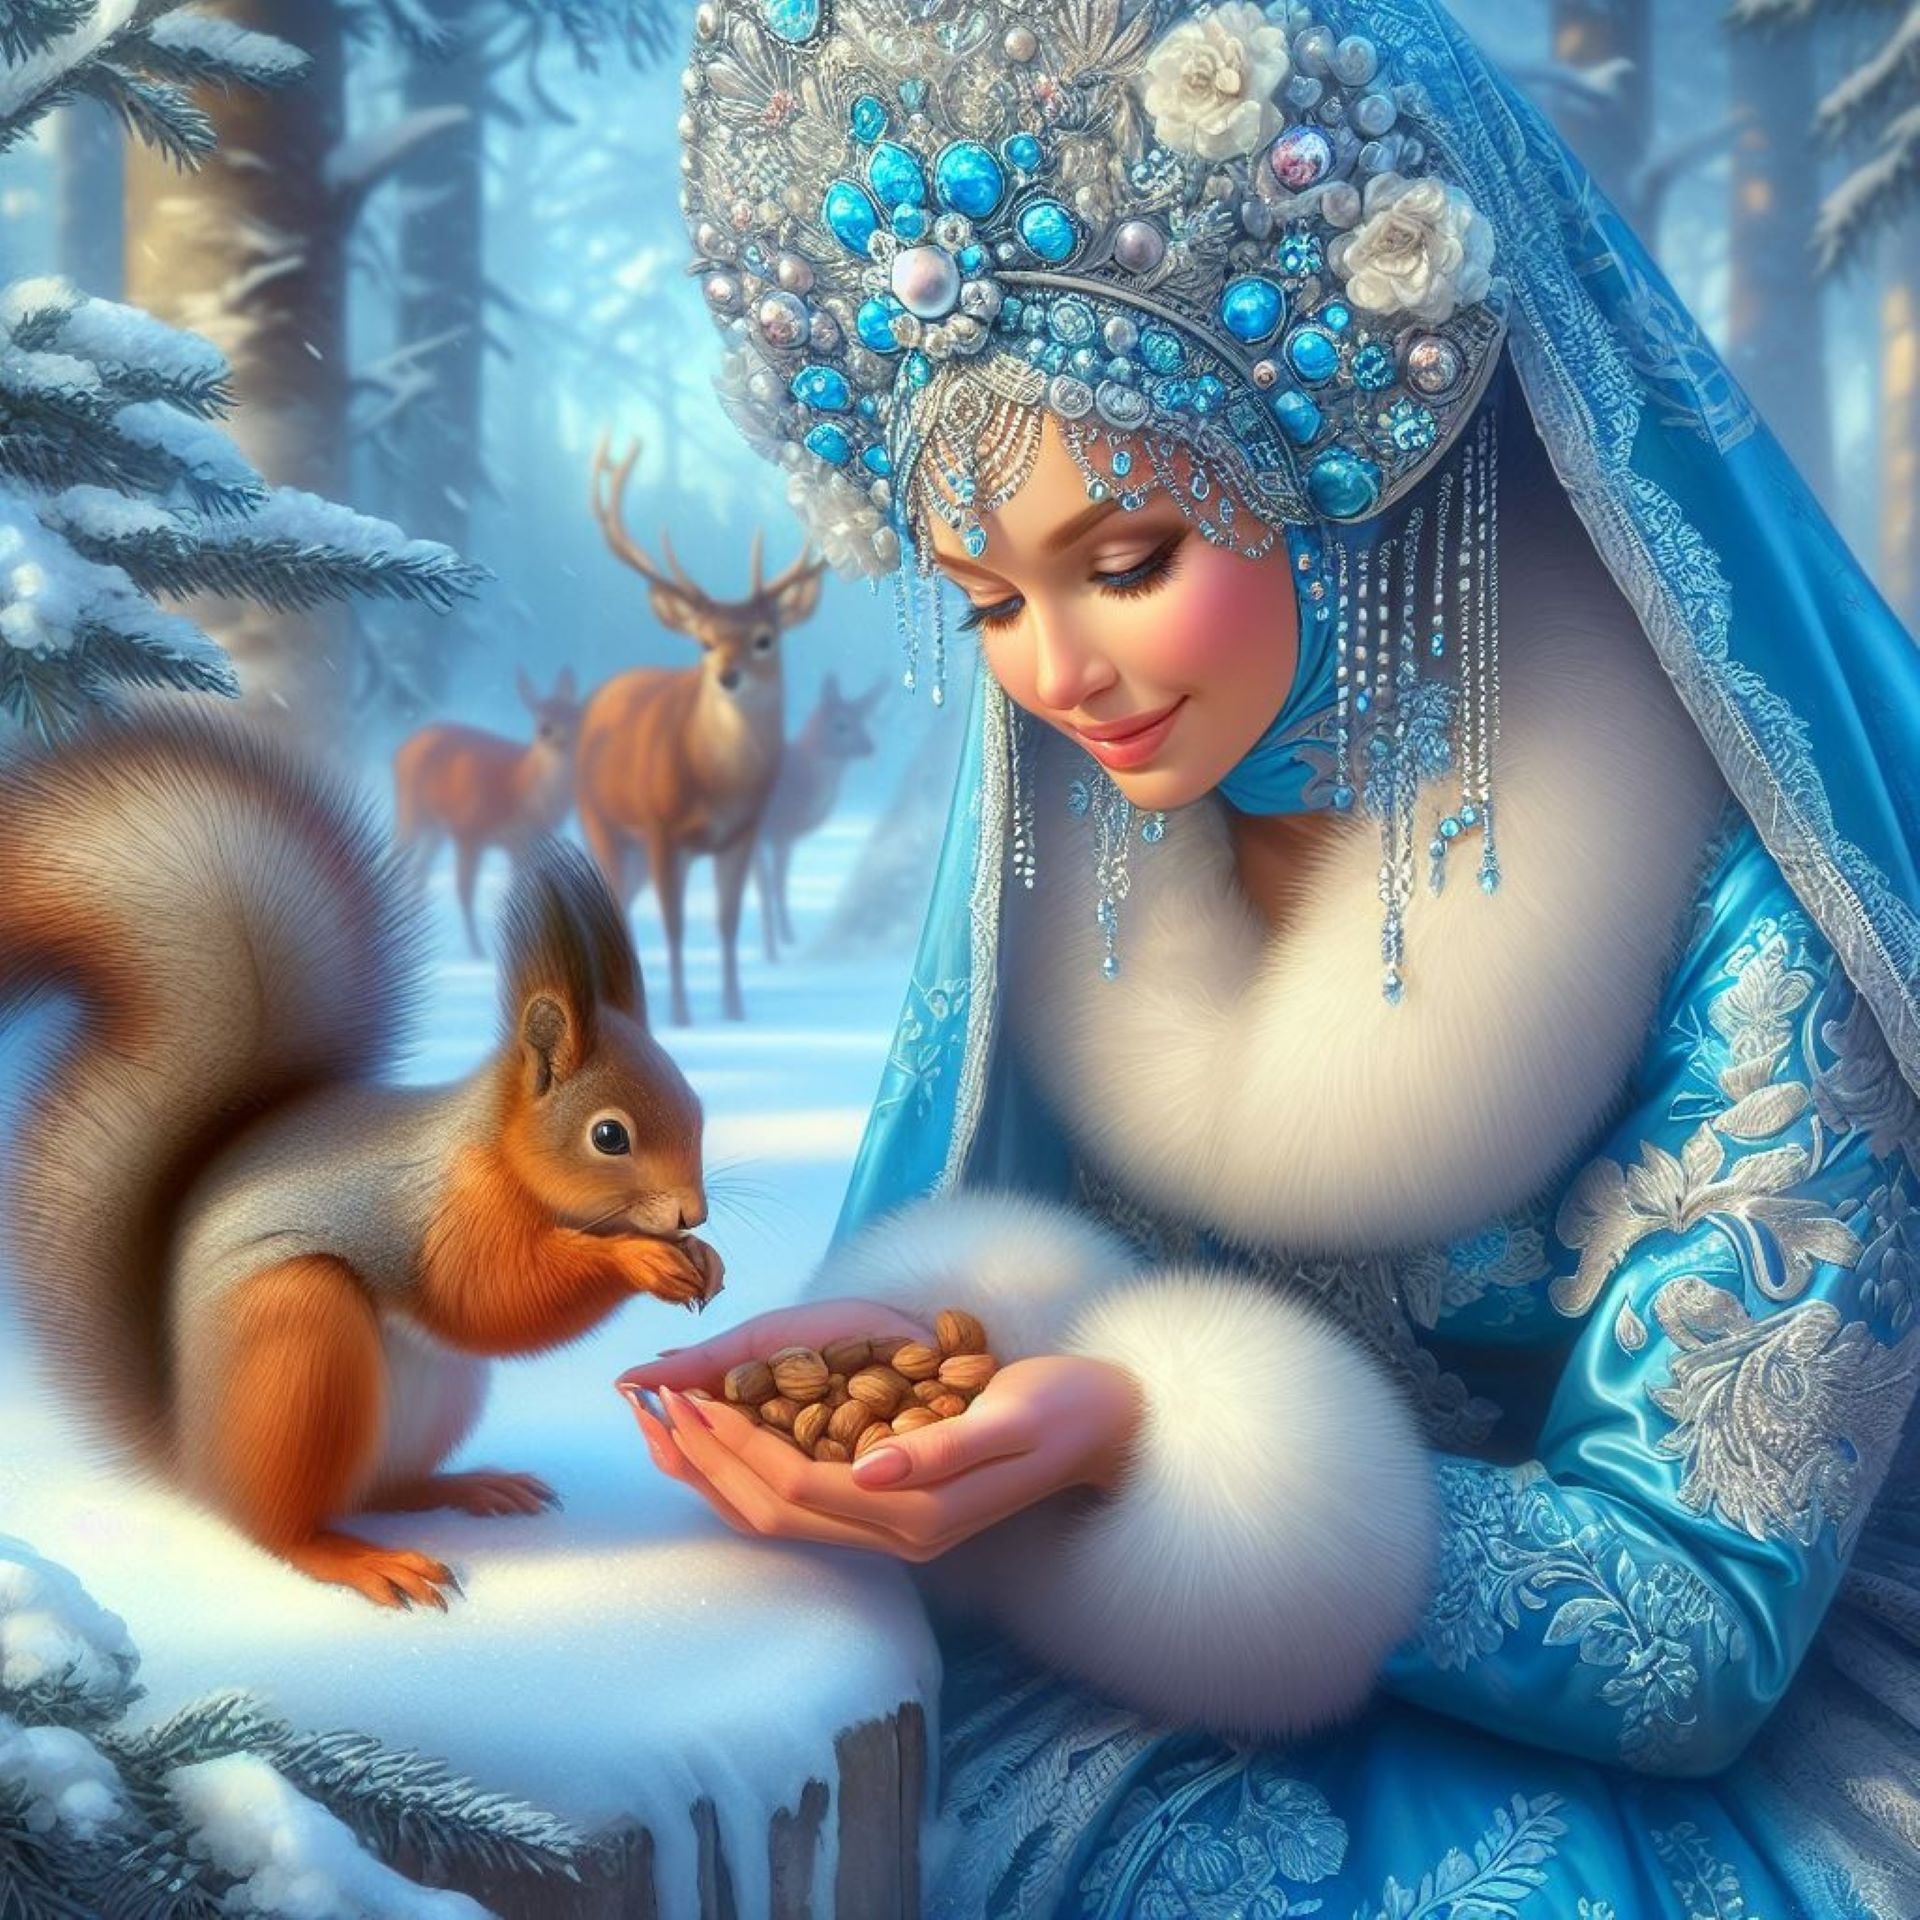 Бесплатное фото Снегурочка кормит белку